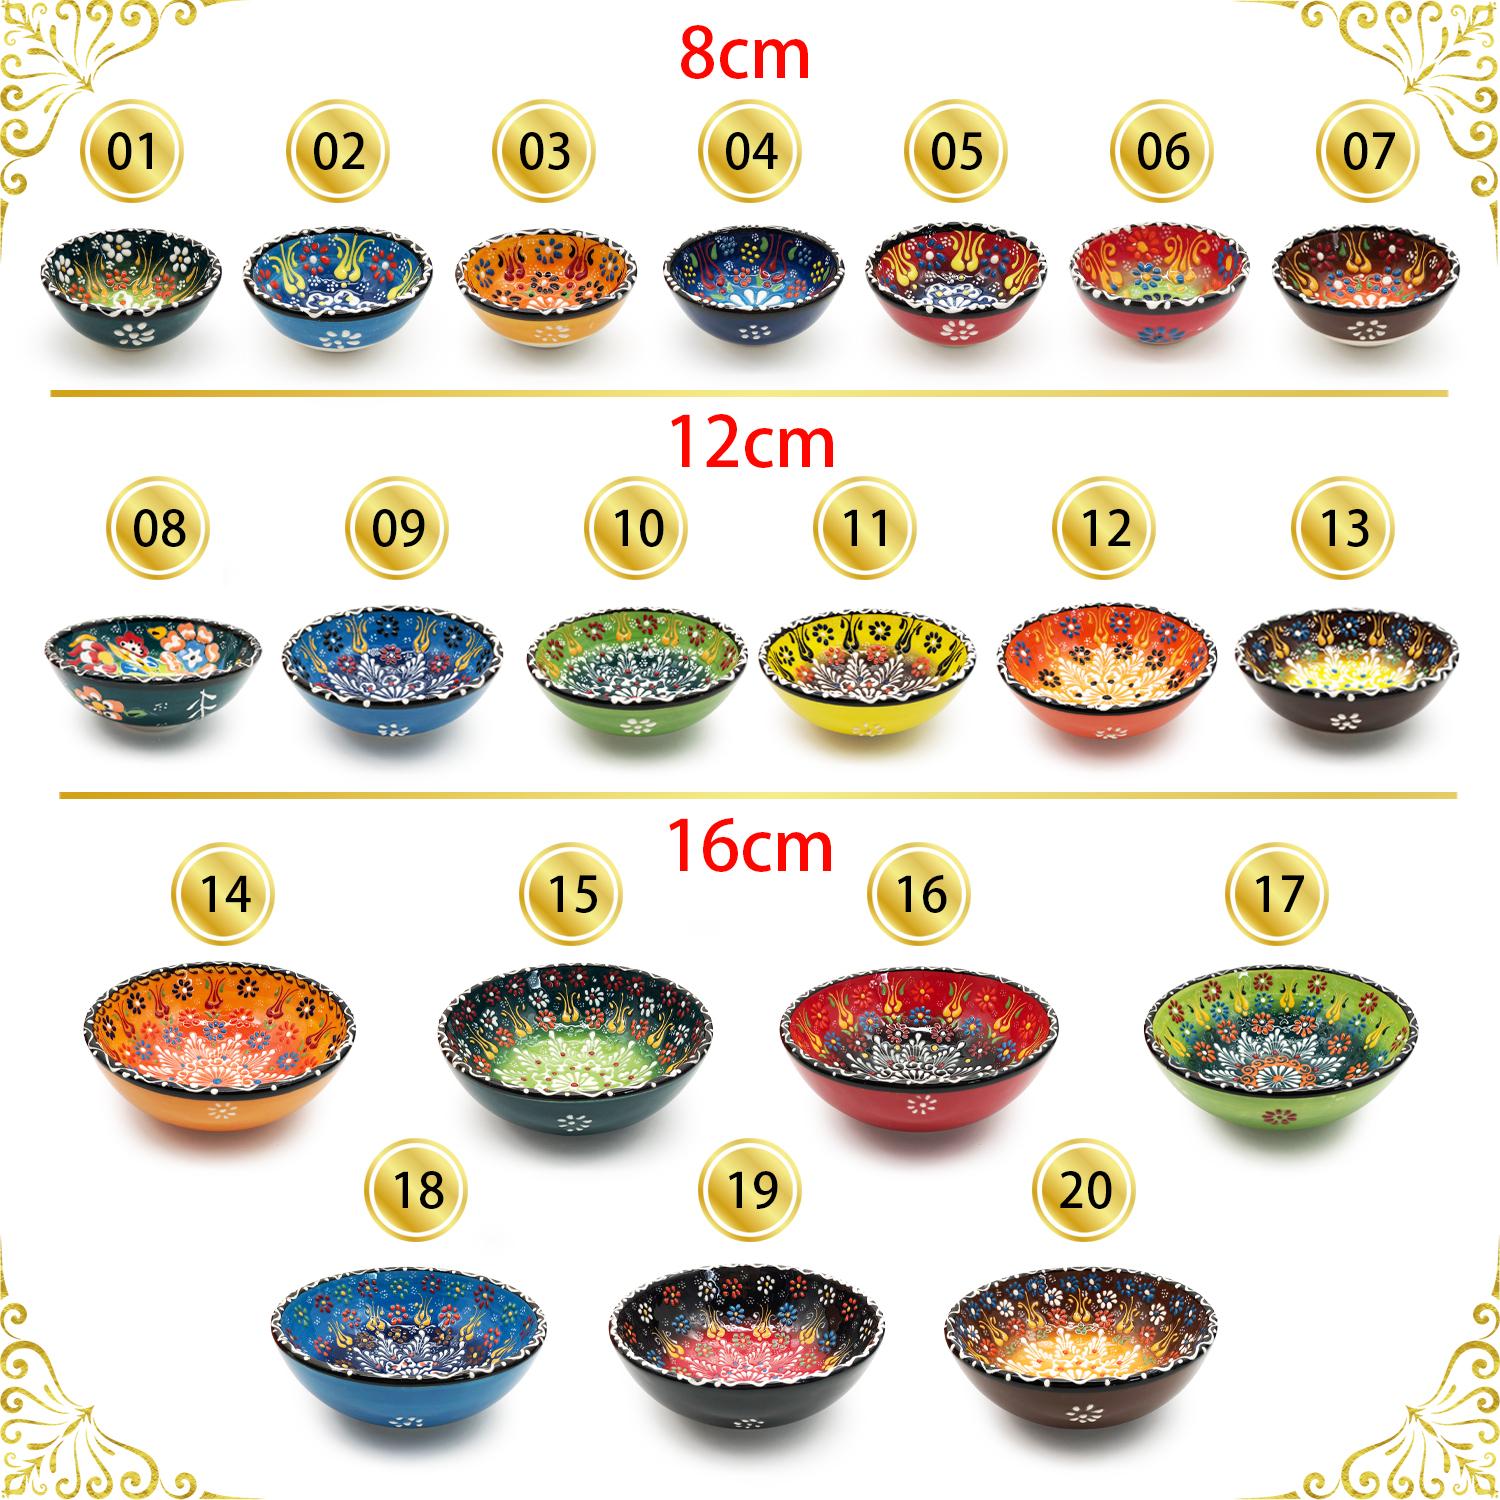 80MM手繪土耳其傳統工藝陶瓷碗， 土耳其餐具奧斯曼帝國浮雕圖案土耳其藝術時尚潮物(VTR-CERAMIC-BOWL-80MM-30007)